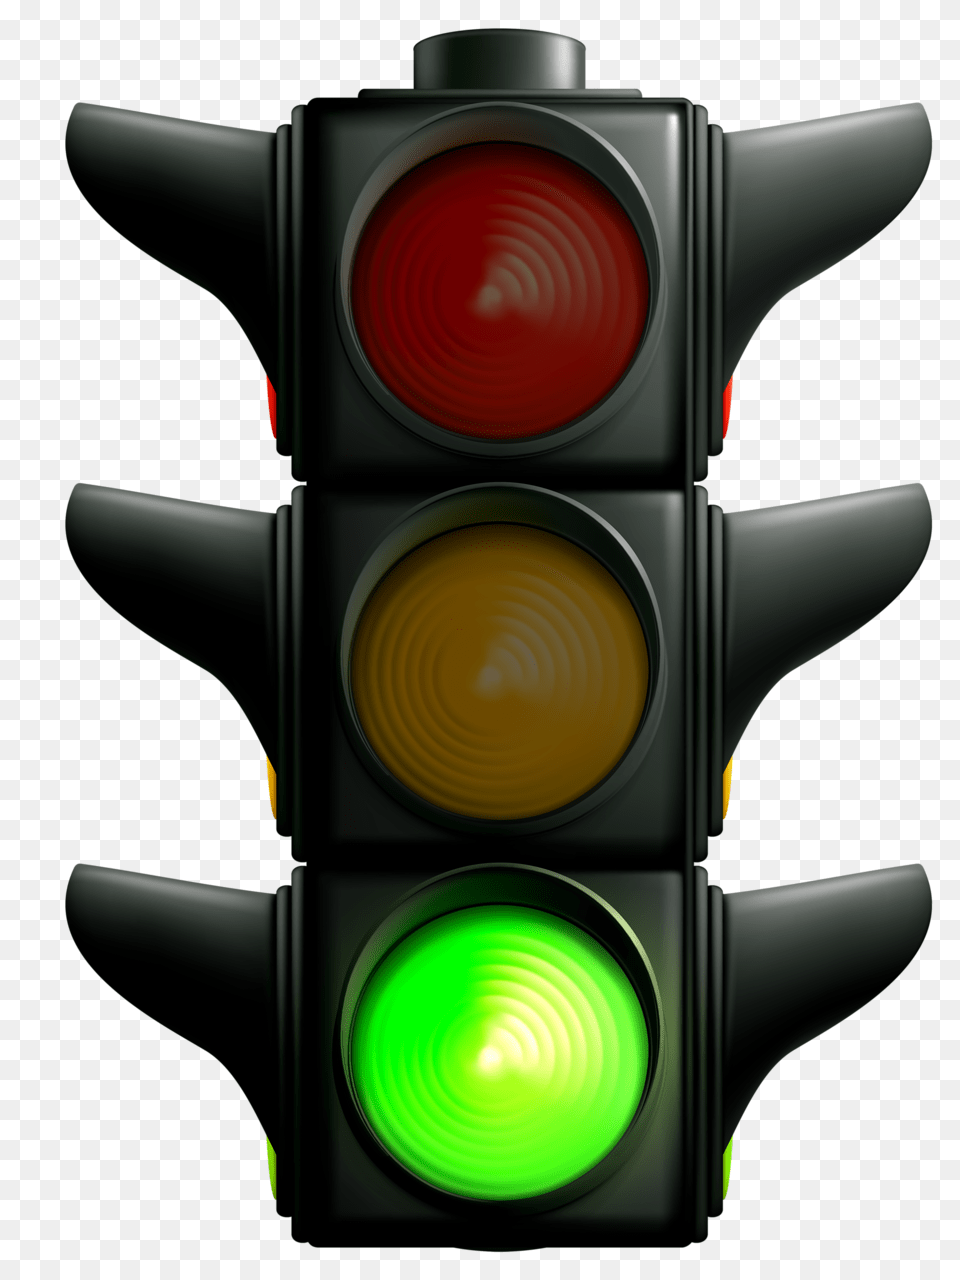 Traffic Light Stop Light, Traffic Light Png Image